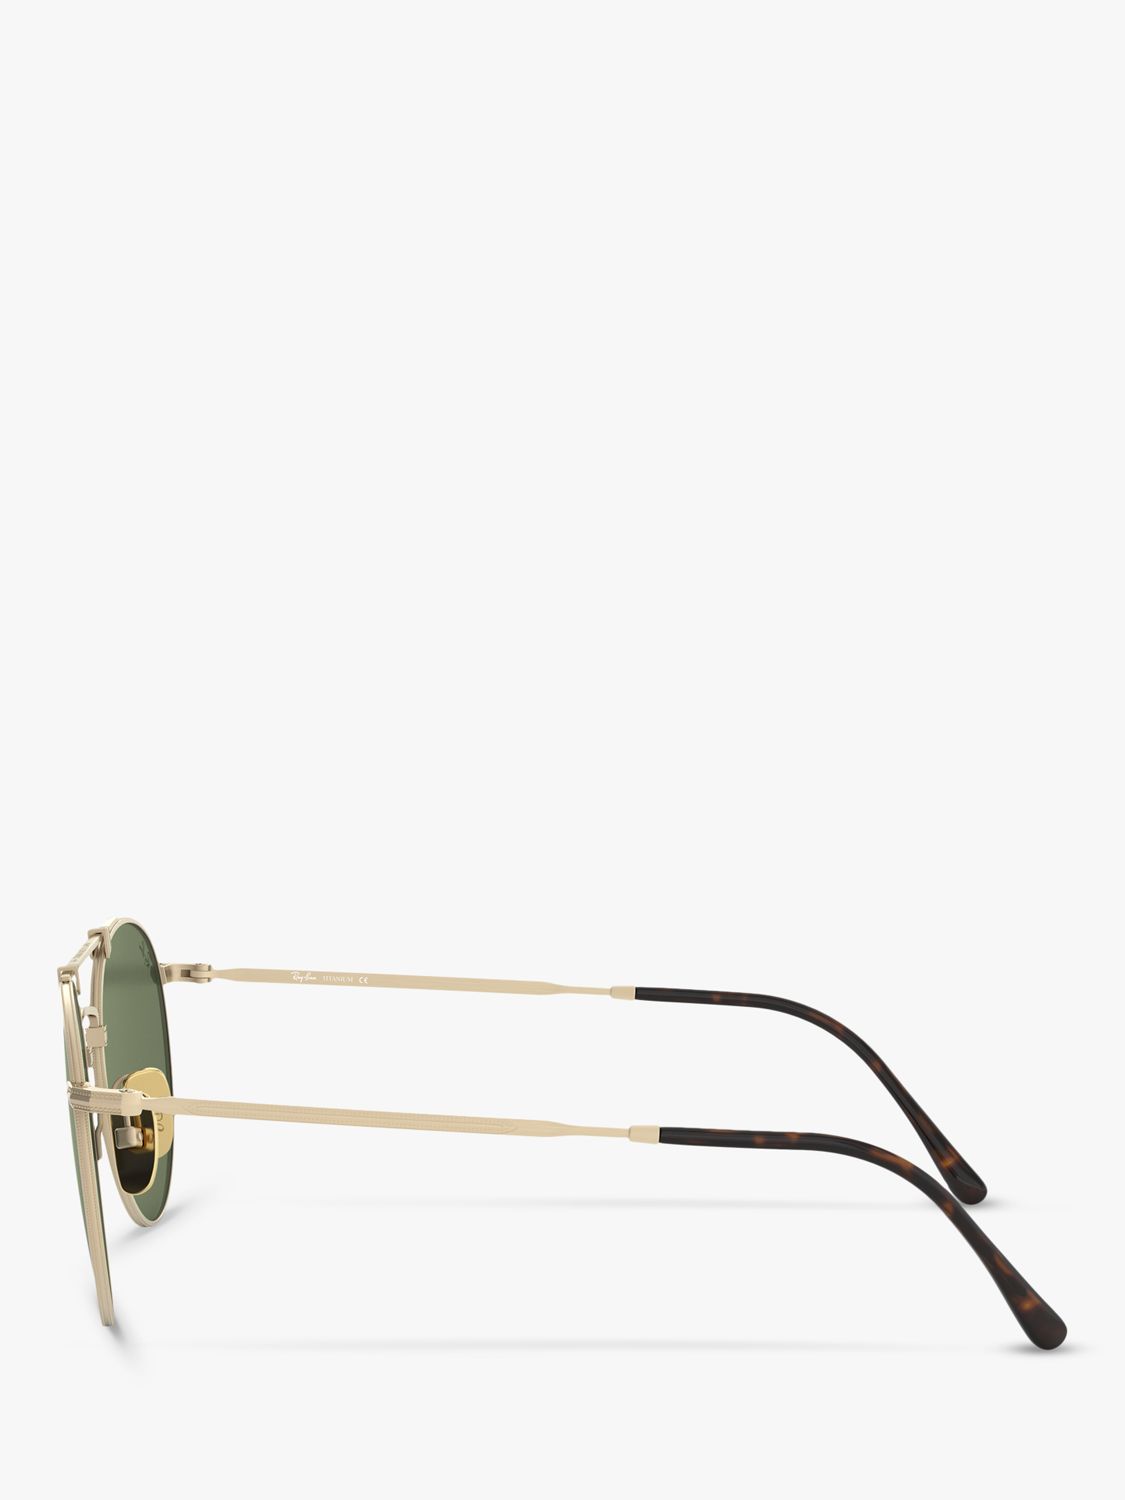 Ray-Ban RB8147 Unisex Round Double Bridge Sunglasses, Brush Gloss/White Gold